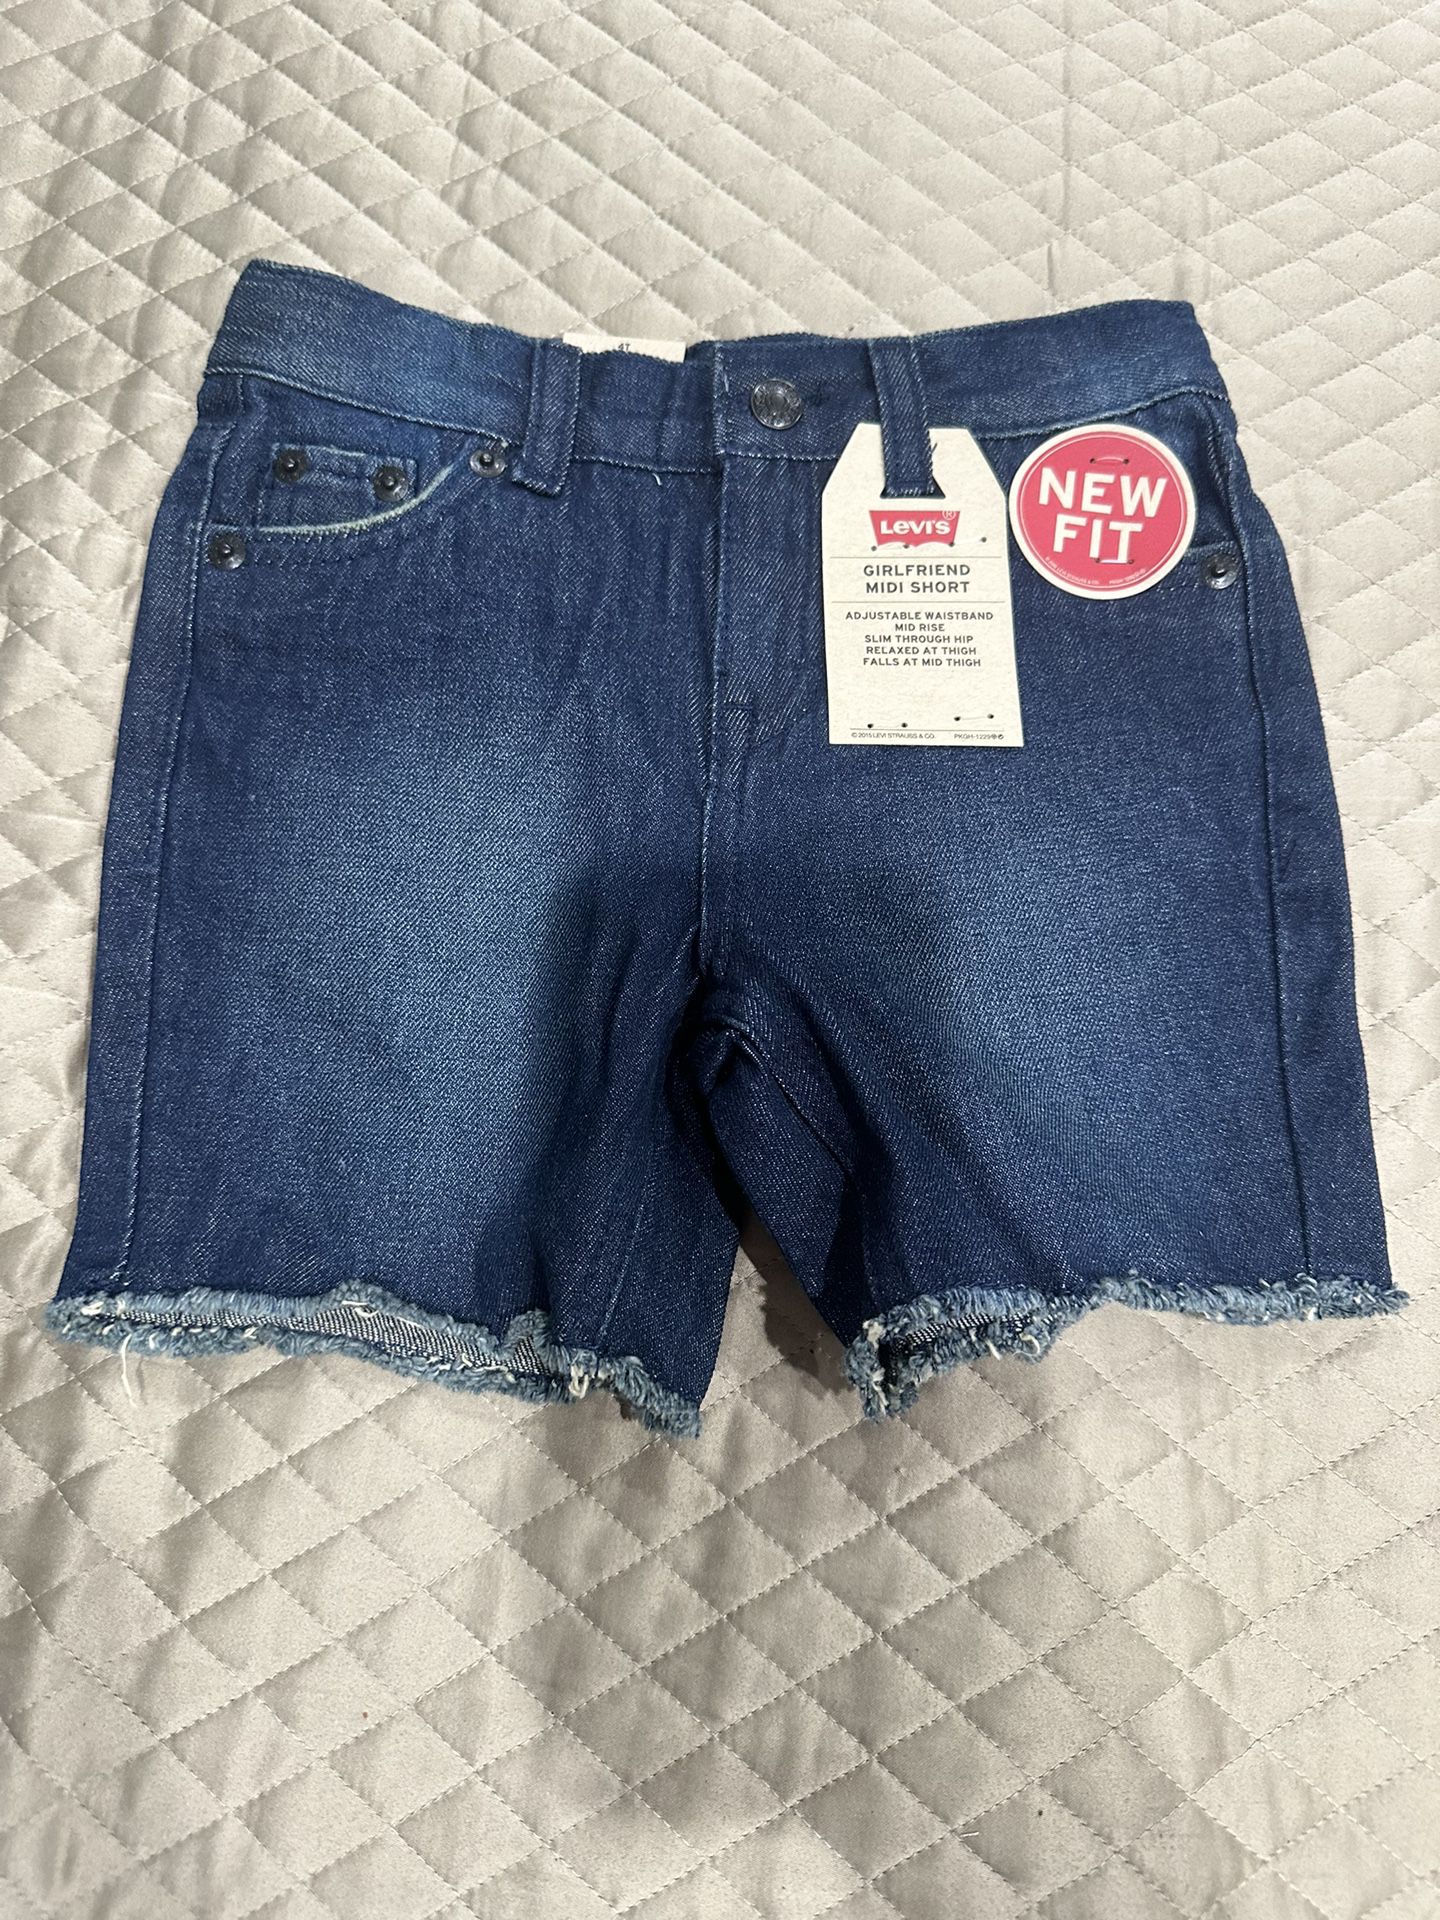 Levi’s girl shorts